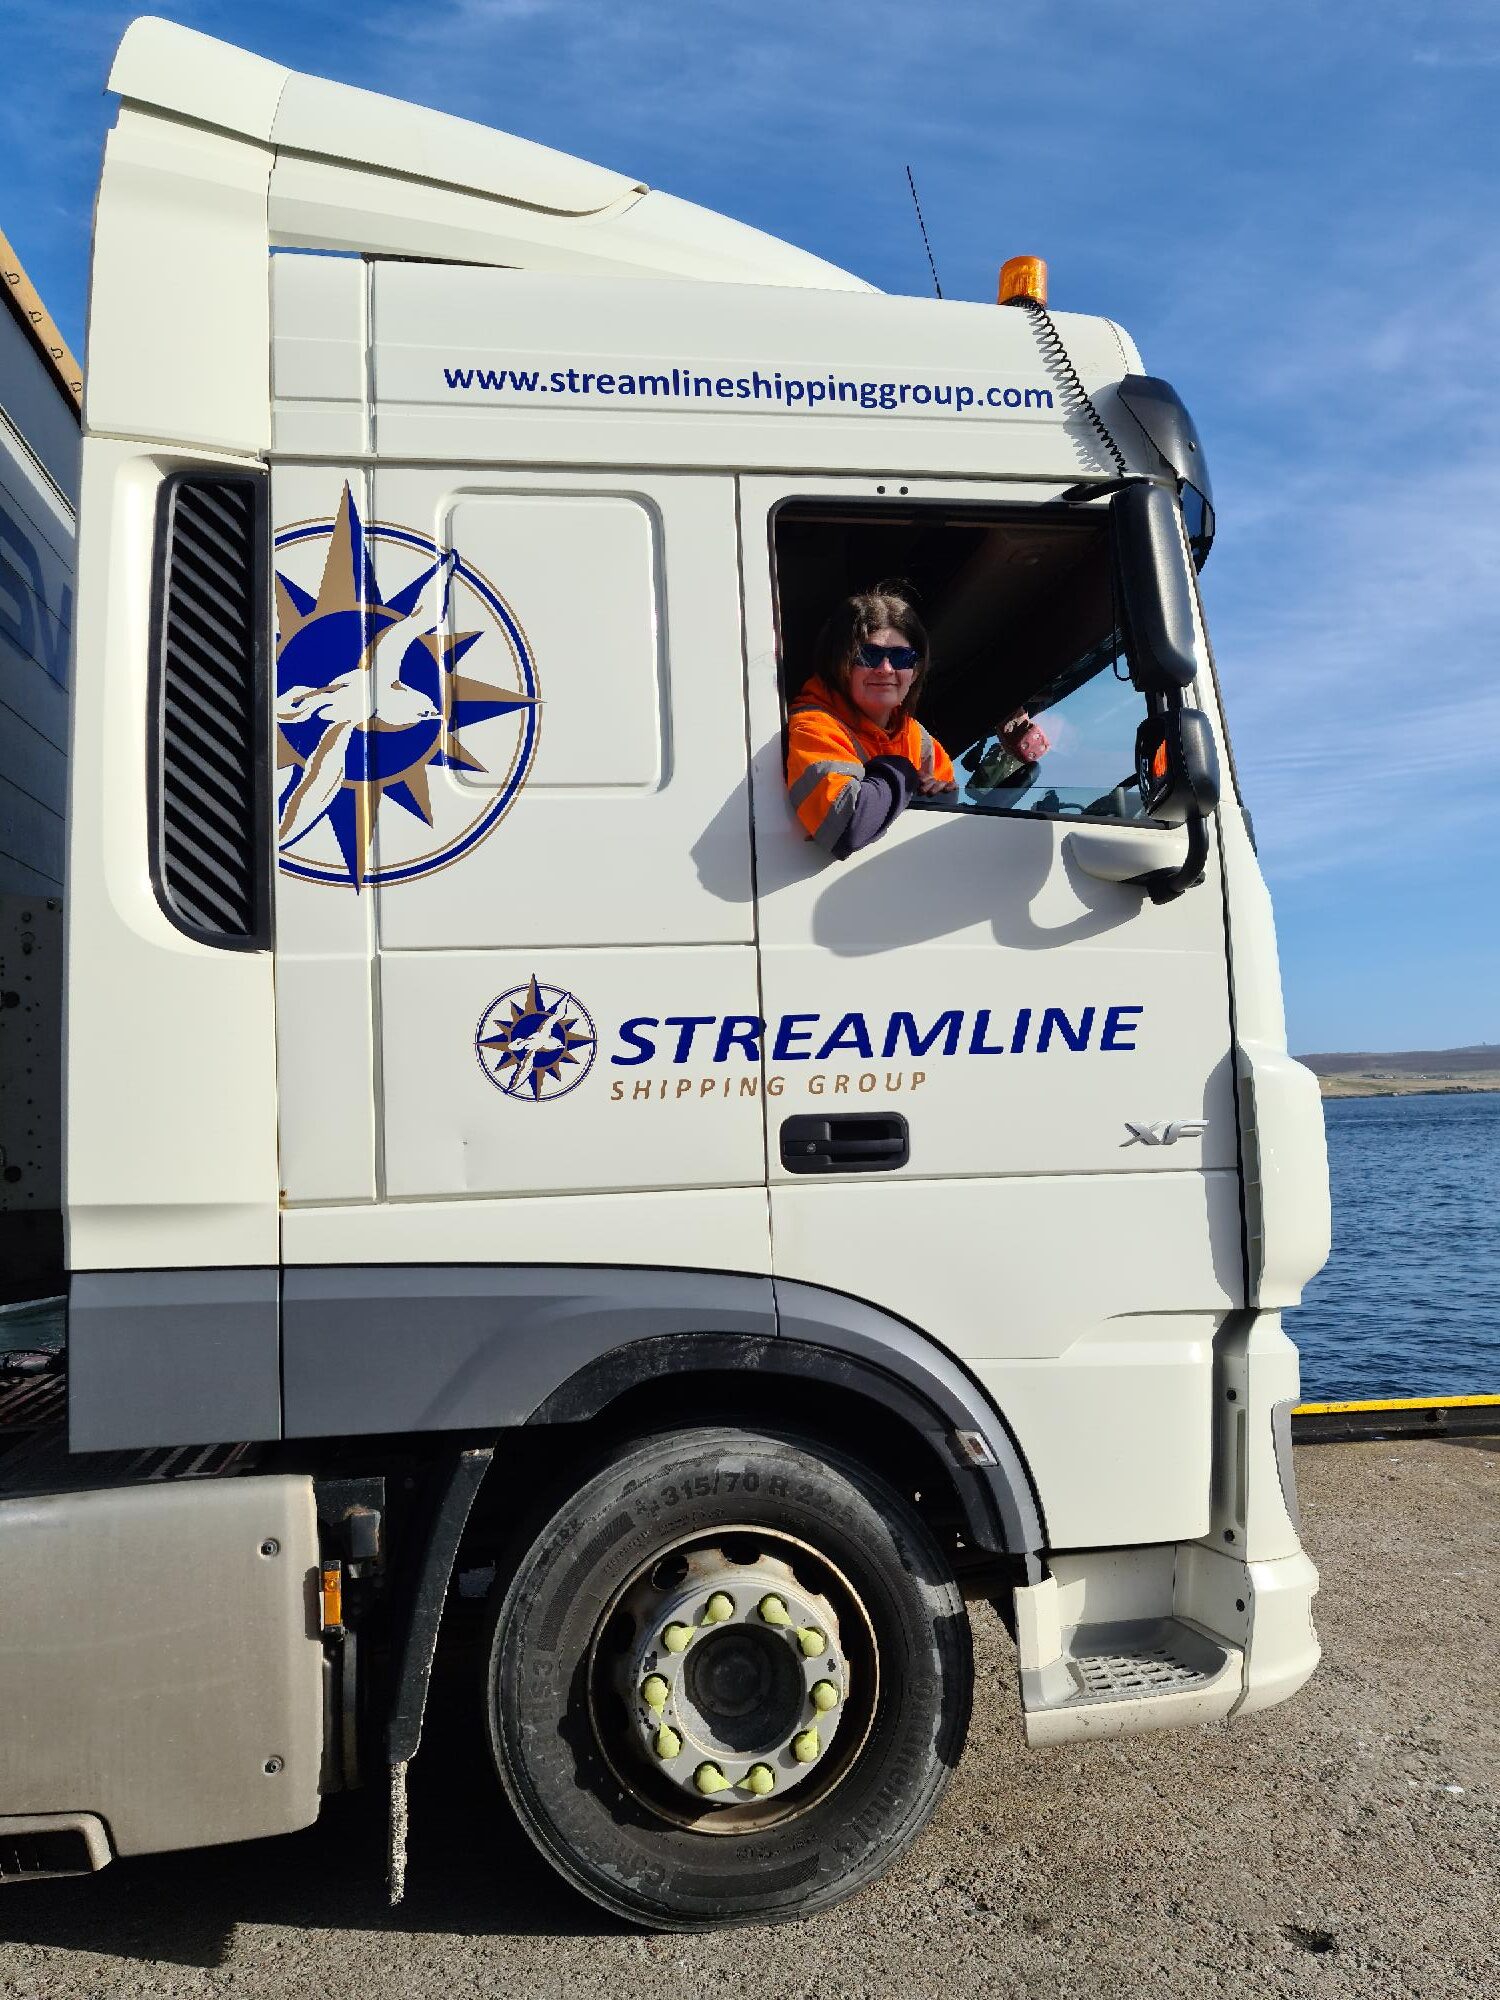 Streamline Shipping Group challenges gender gap across UK logistics